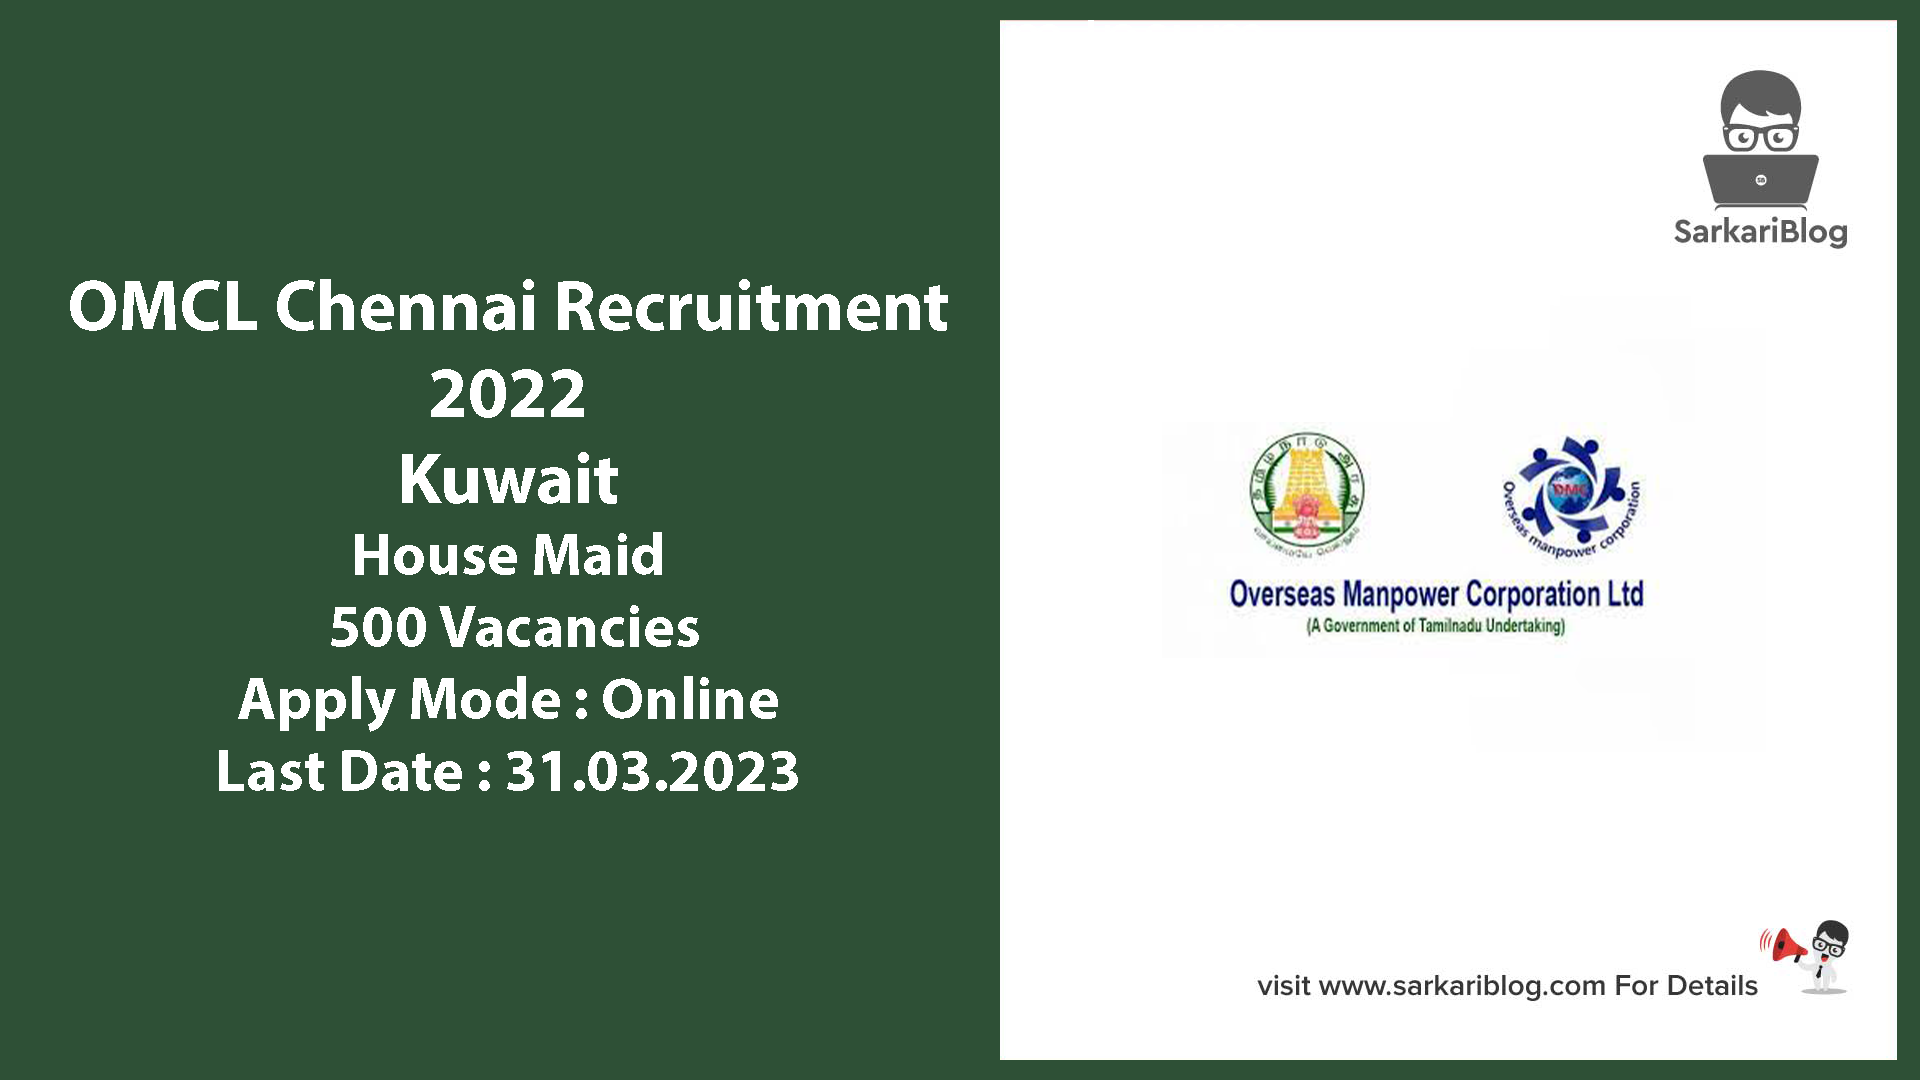 OMCL Chennai Recruitment 2022